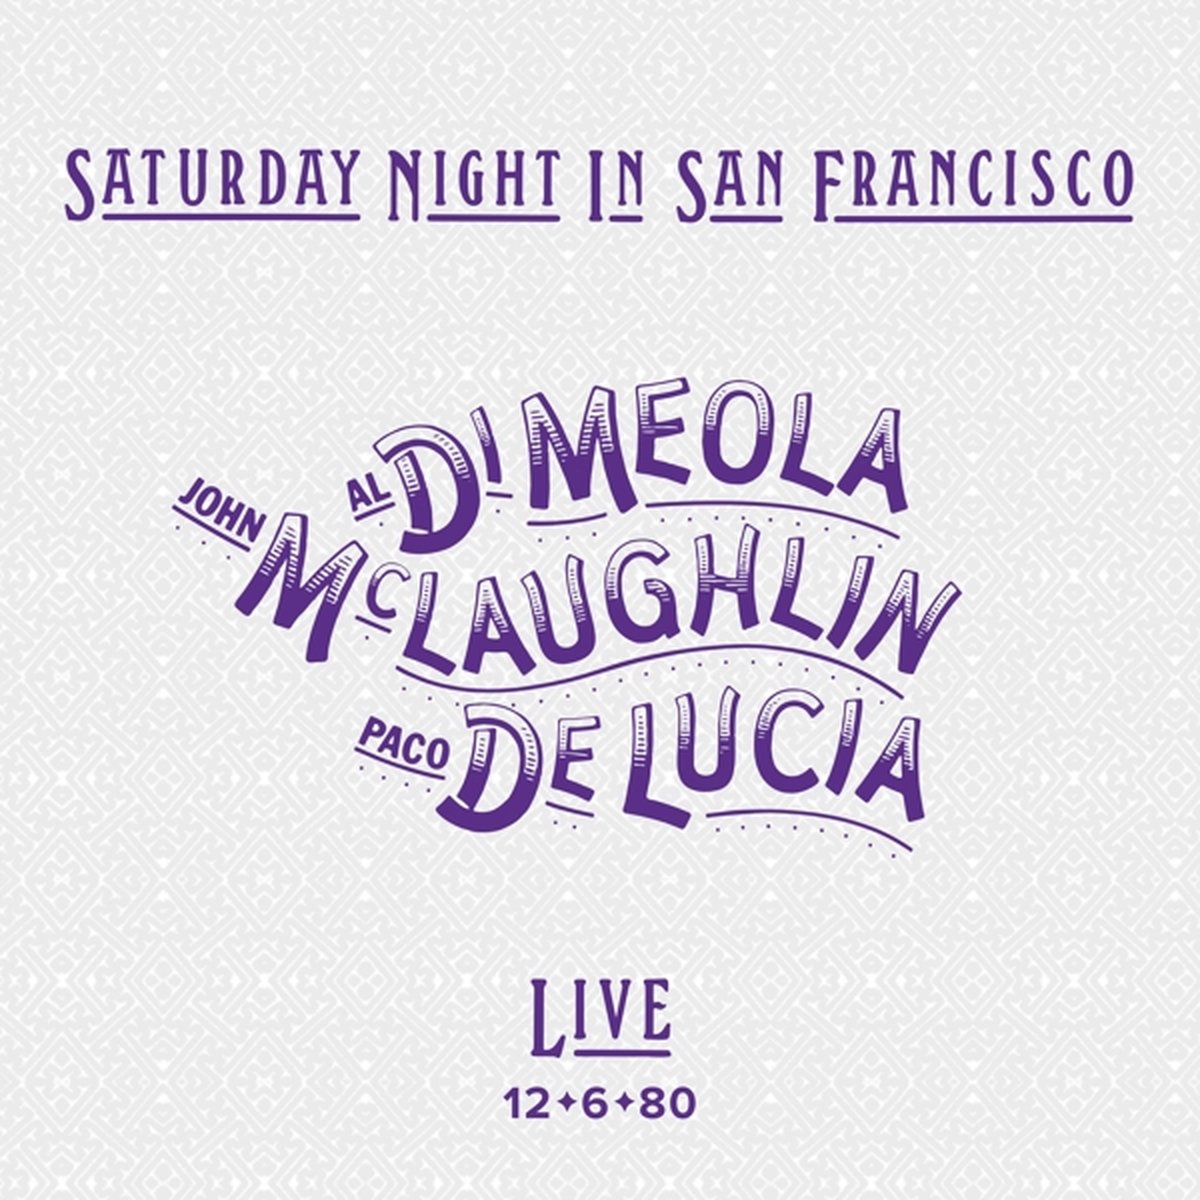 Al Di Meola, John McLaughlin & Paco DeLucia - Saturday Night In San Francisco